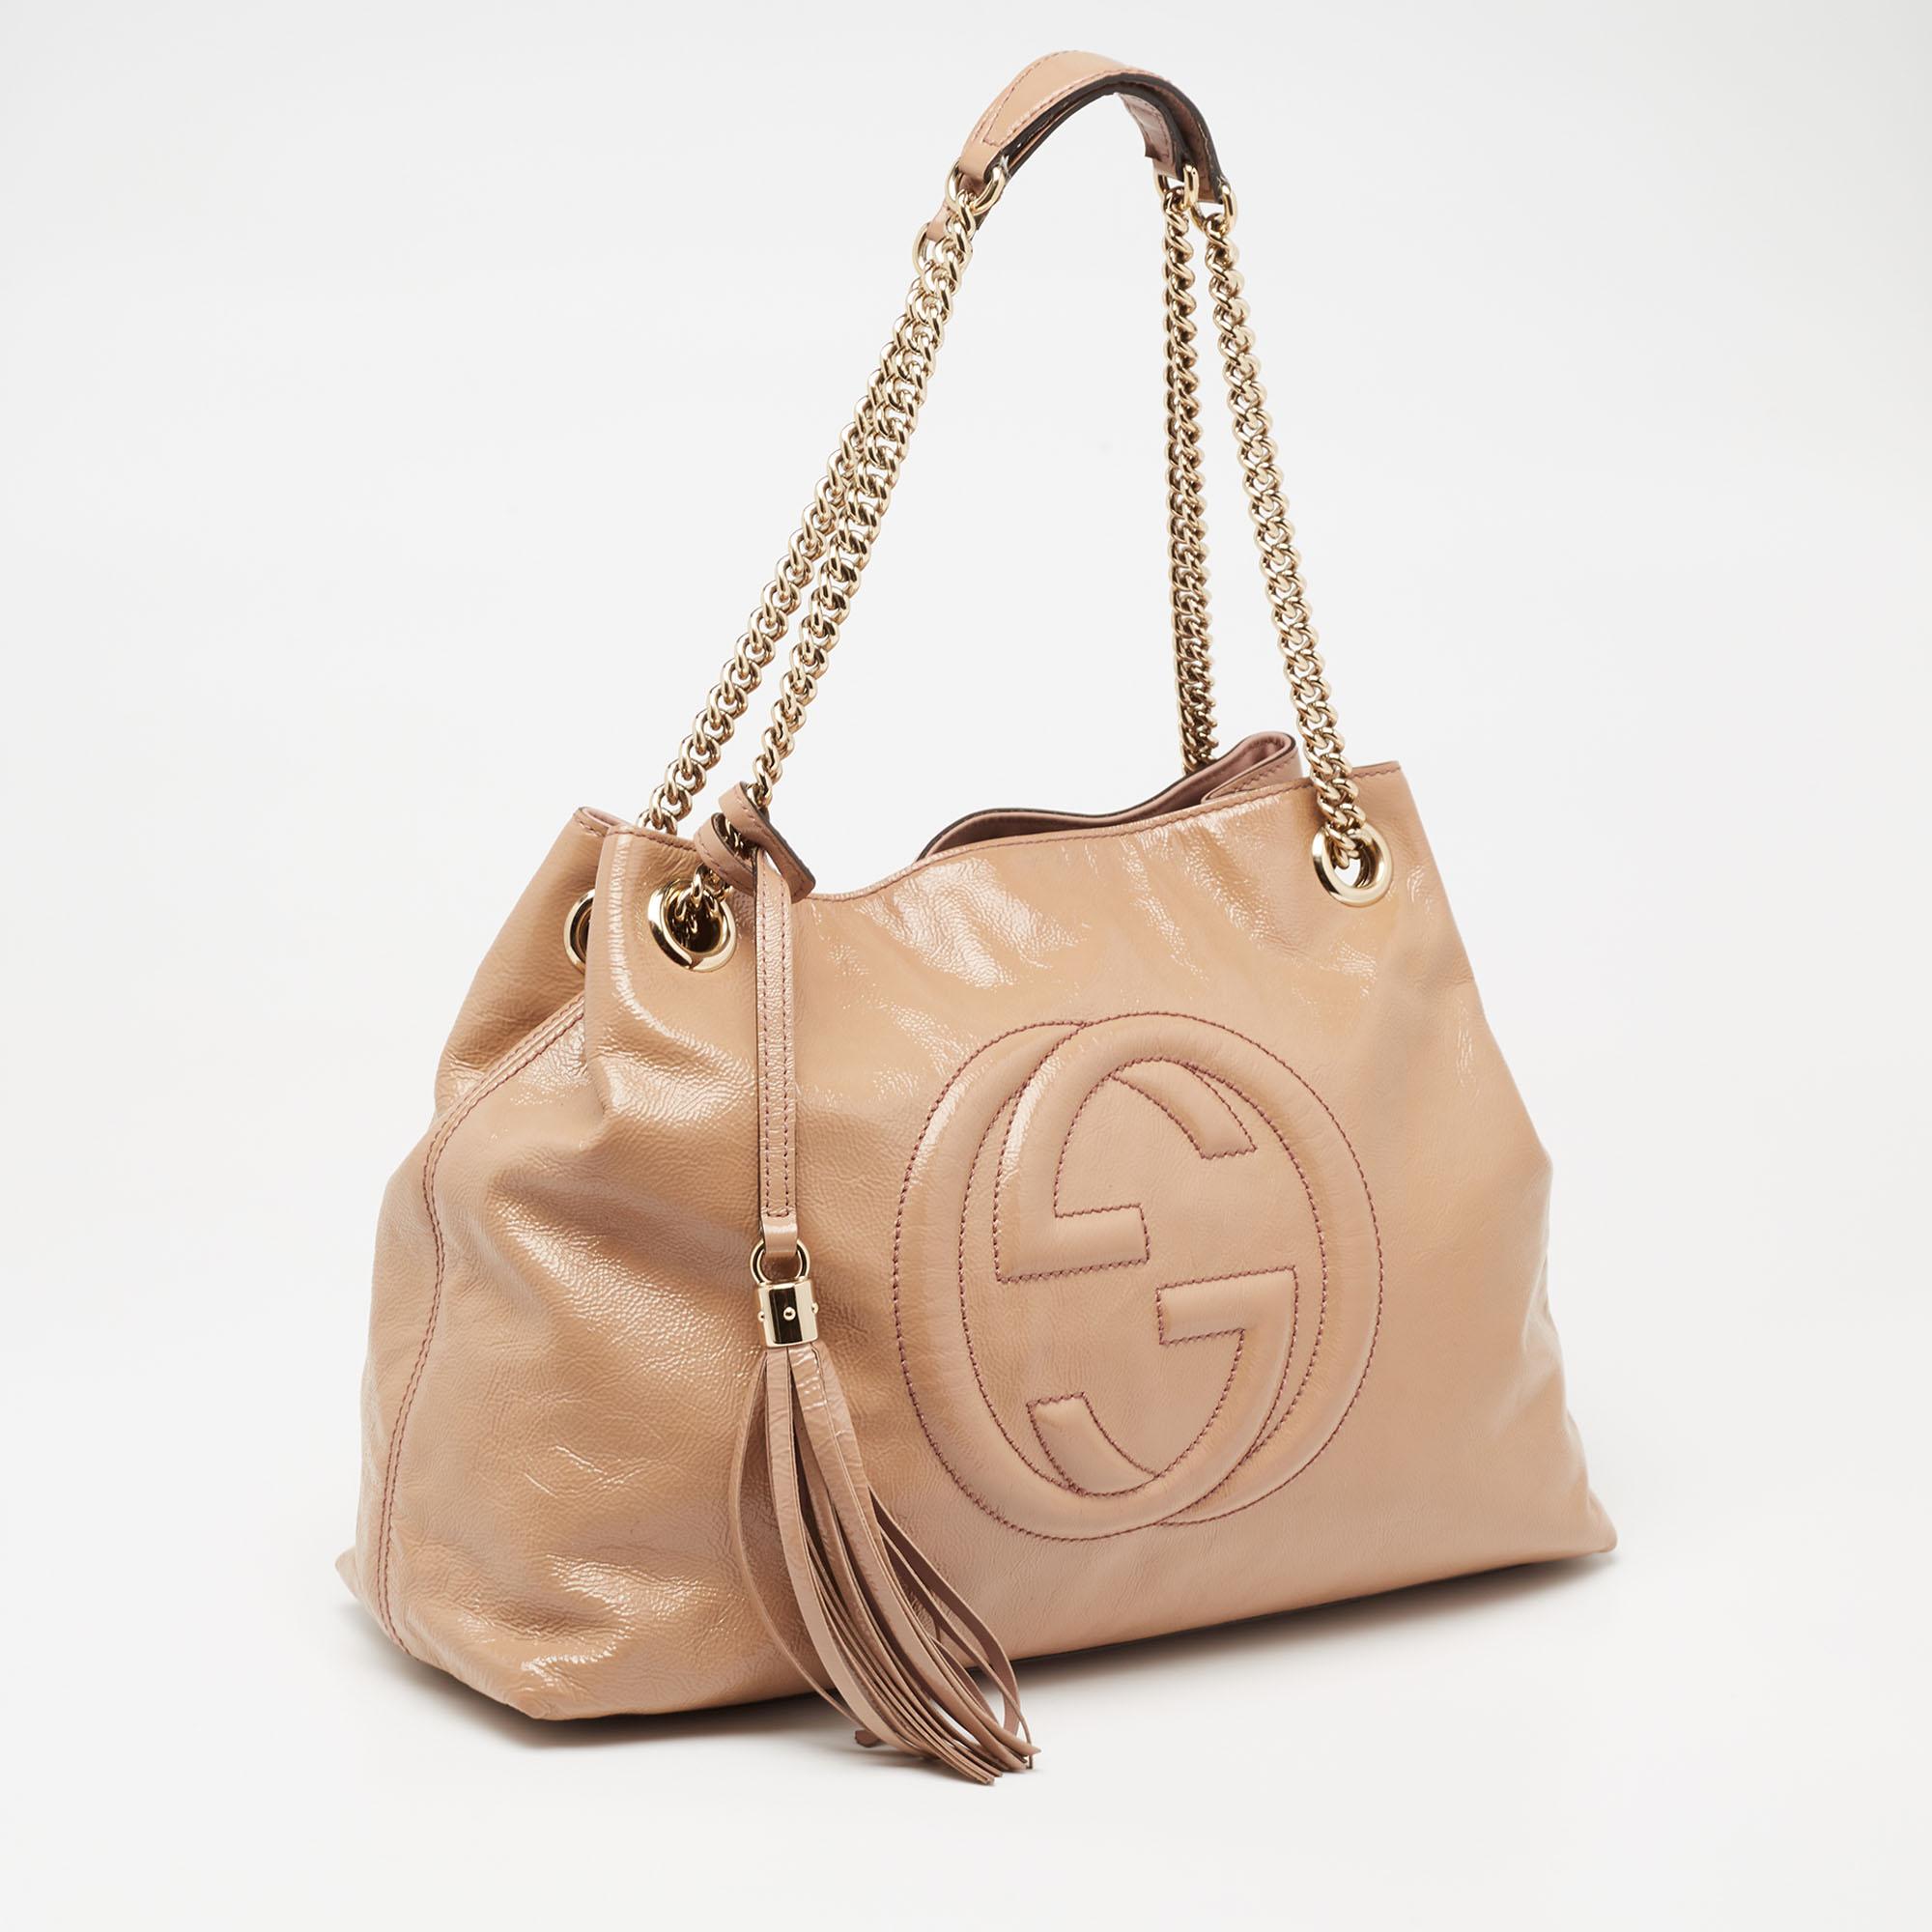 Women's Gucci Beige Patent Leather Medium Soho Chain Tote